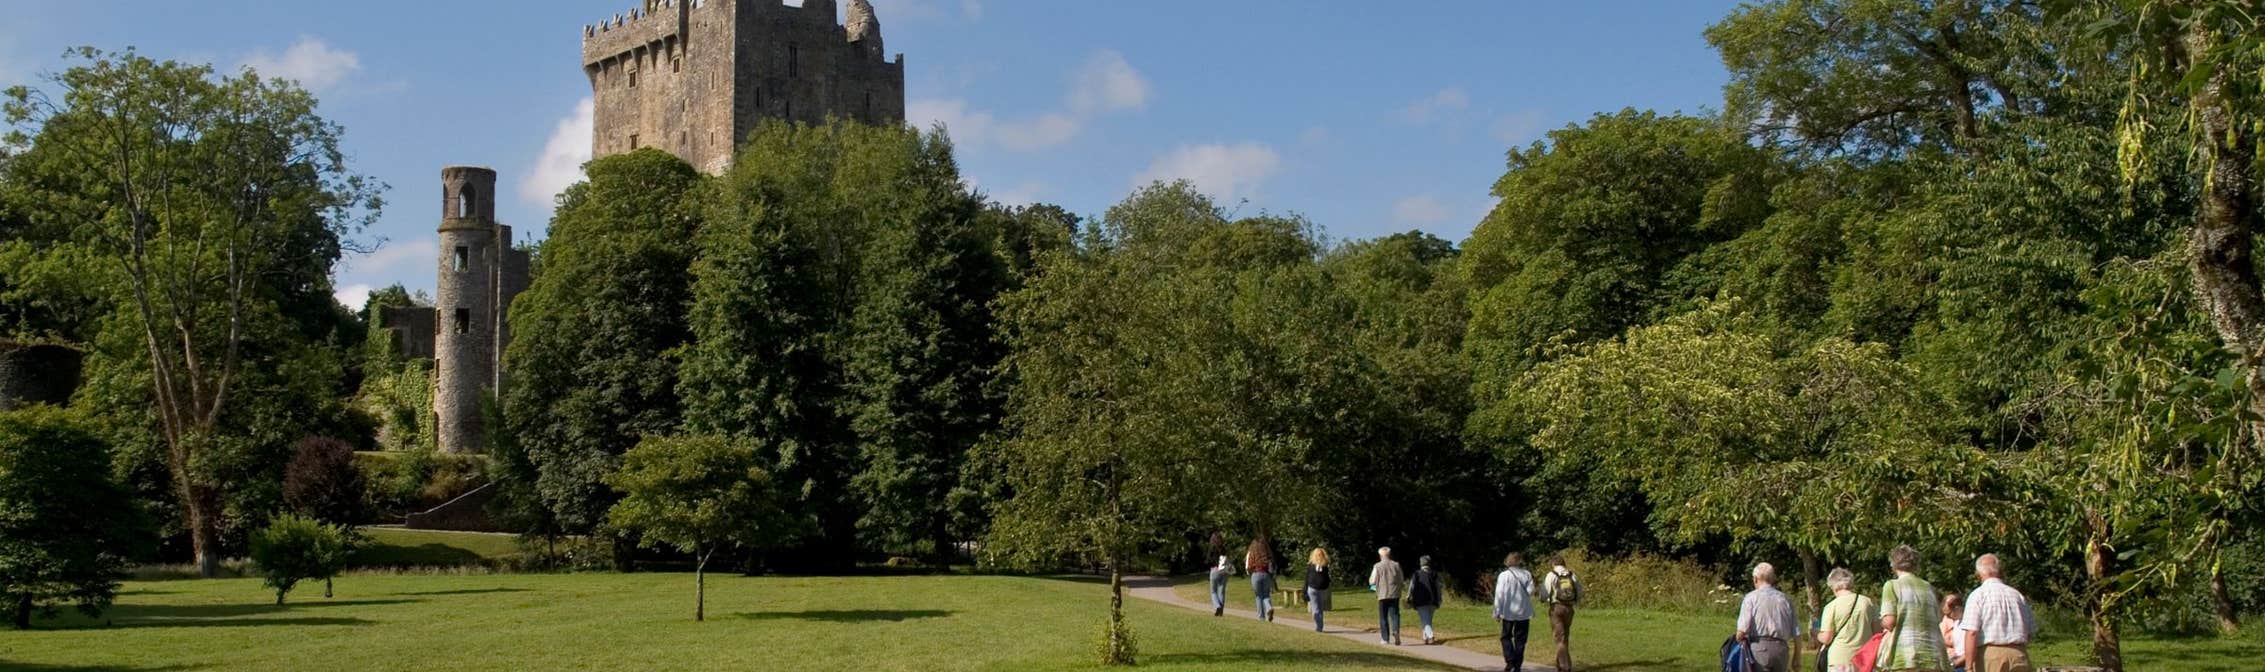 A group of people walking towards Blarney Castle in County Cork